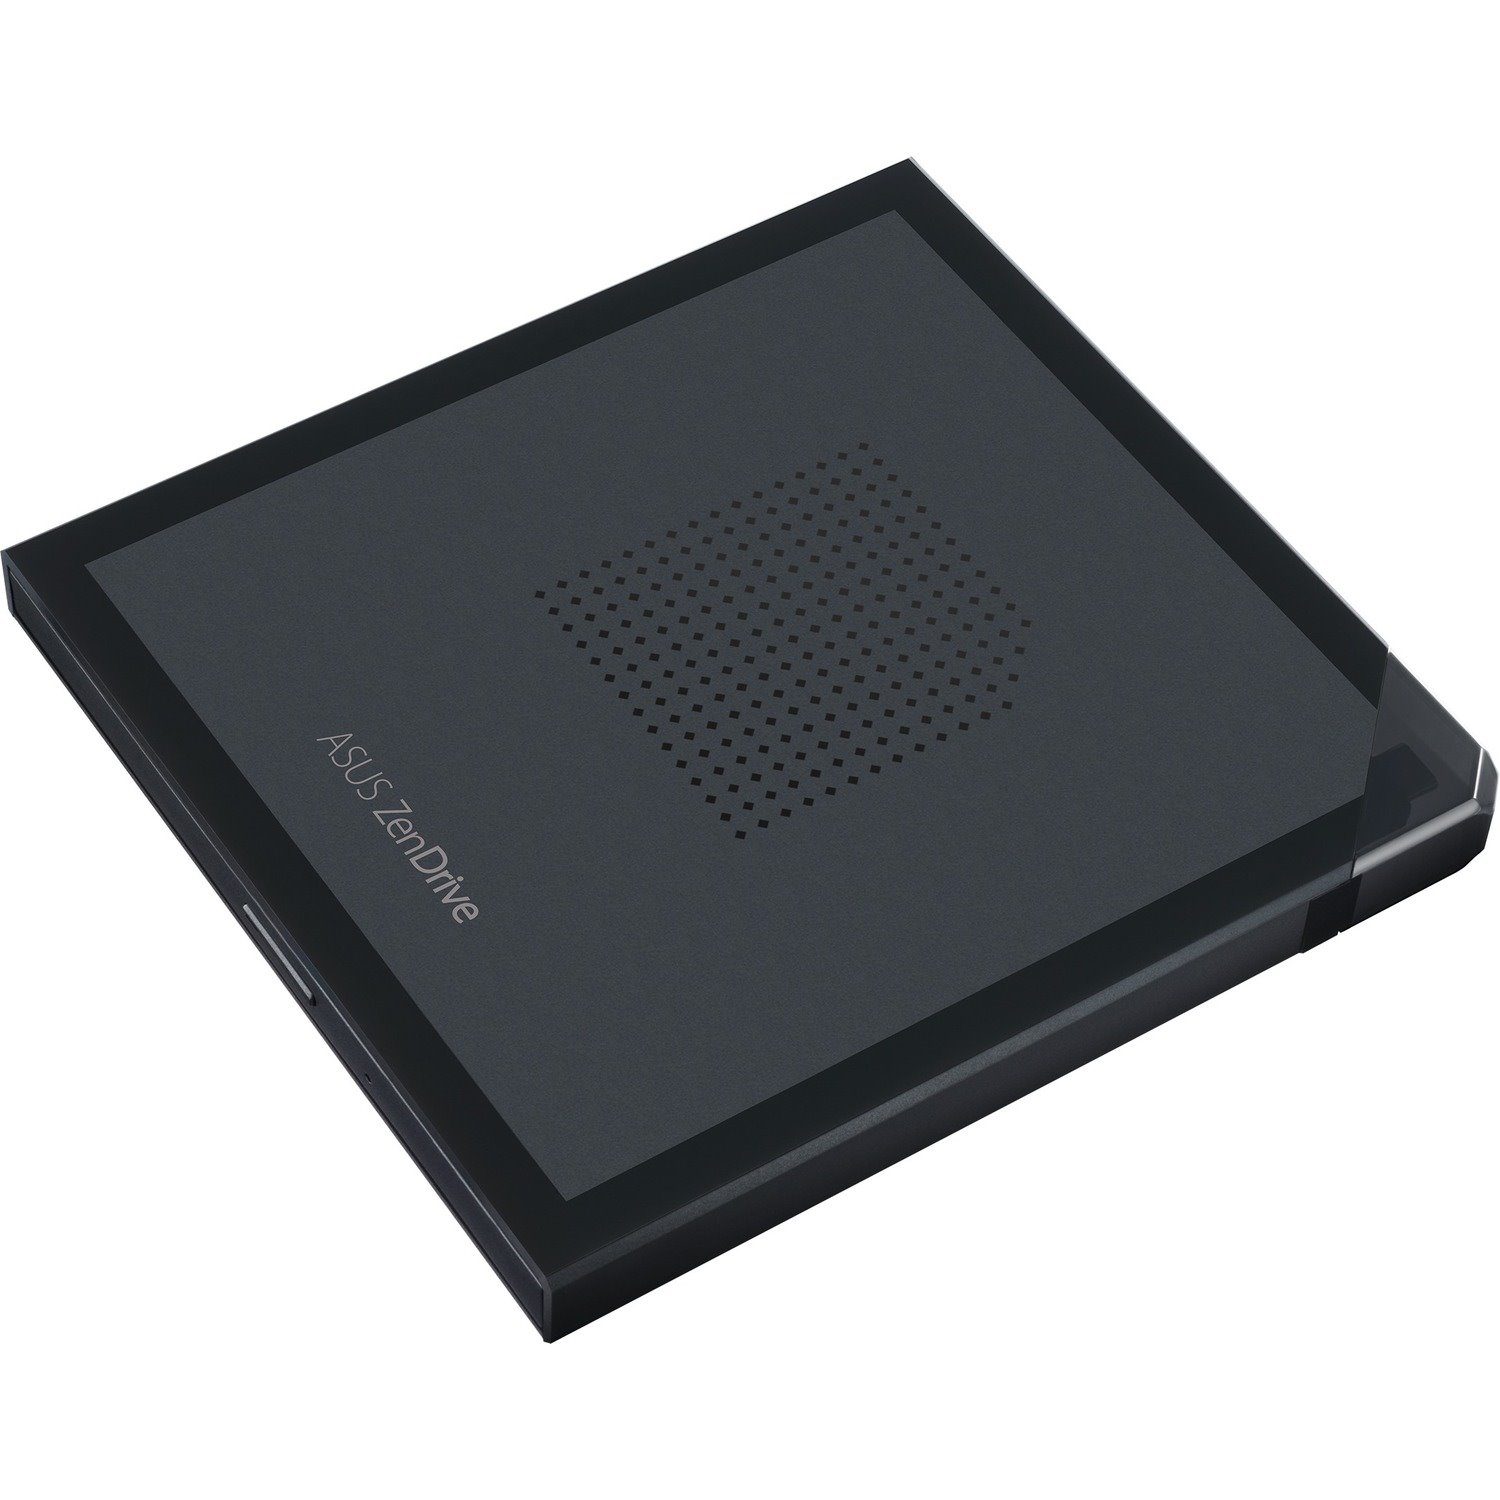 Asus ZenDrive V1M SDRW-08V1M-U DVD-Writer - External - Retail Pack - Black